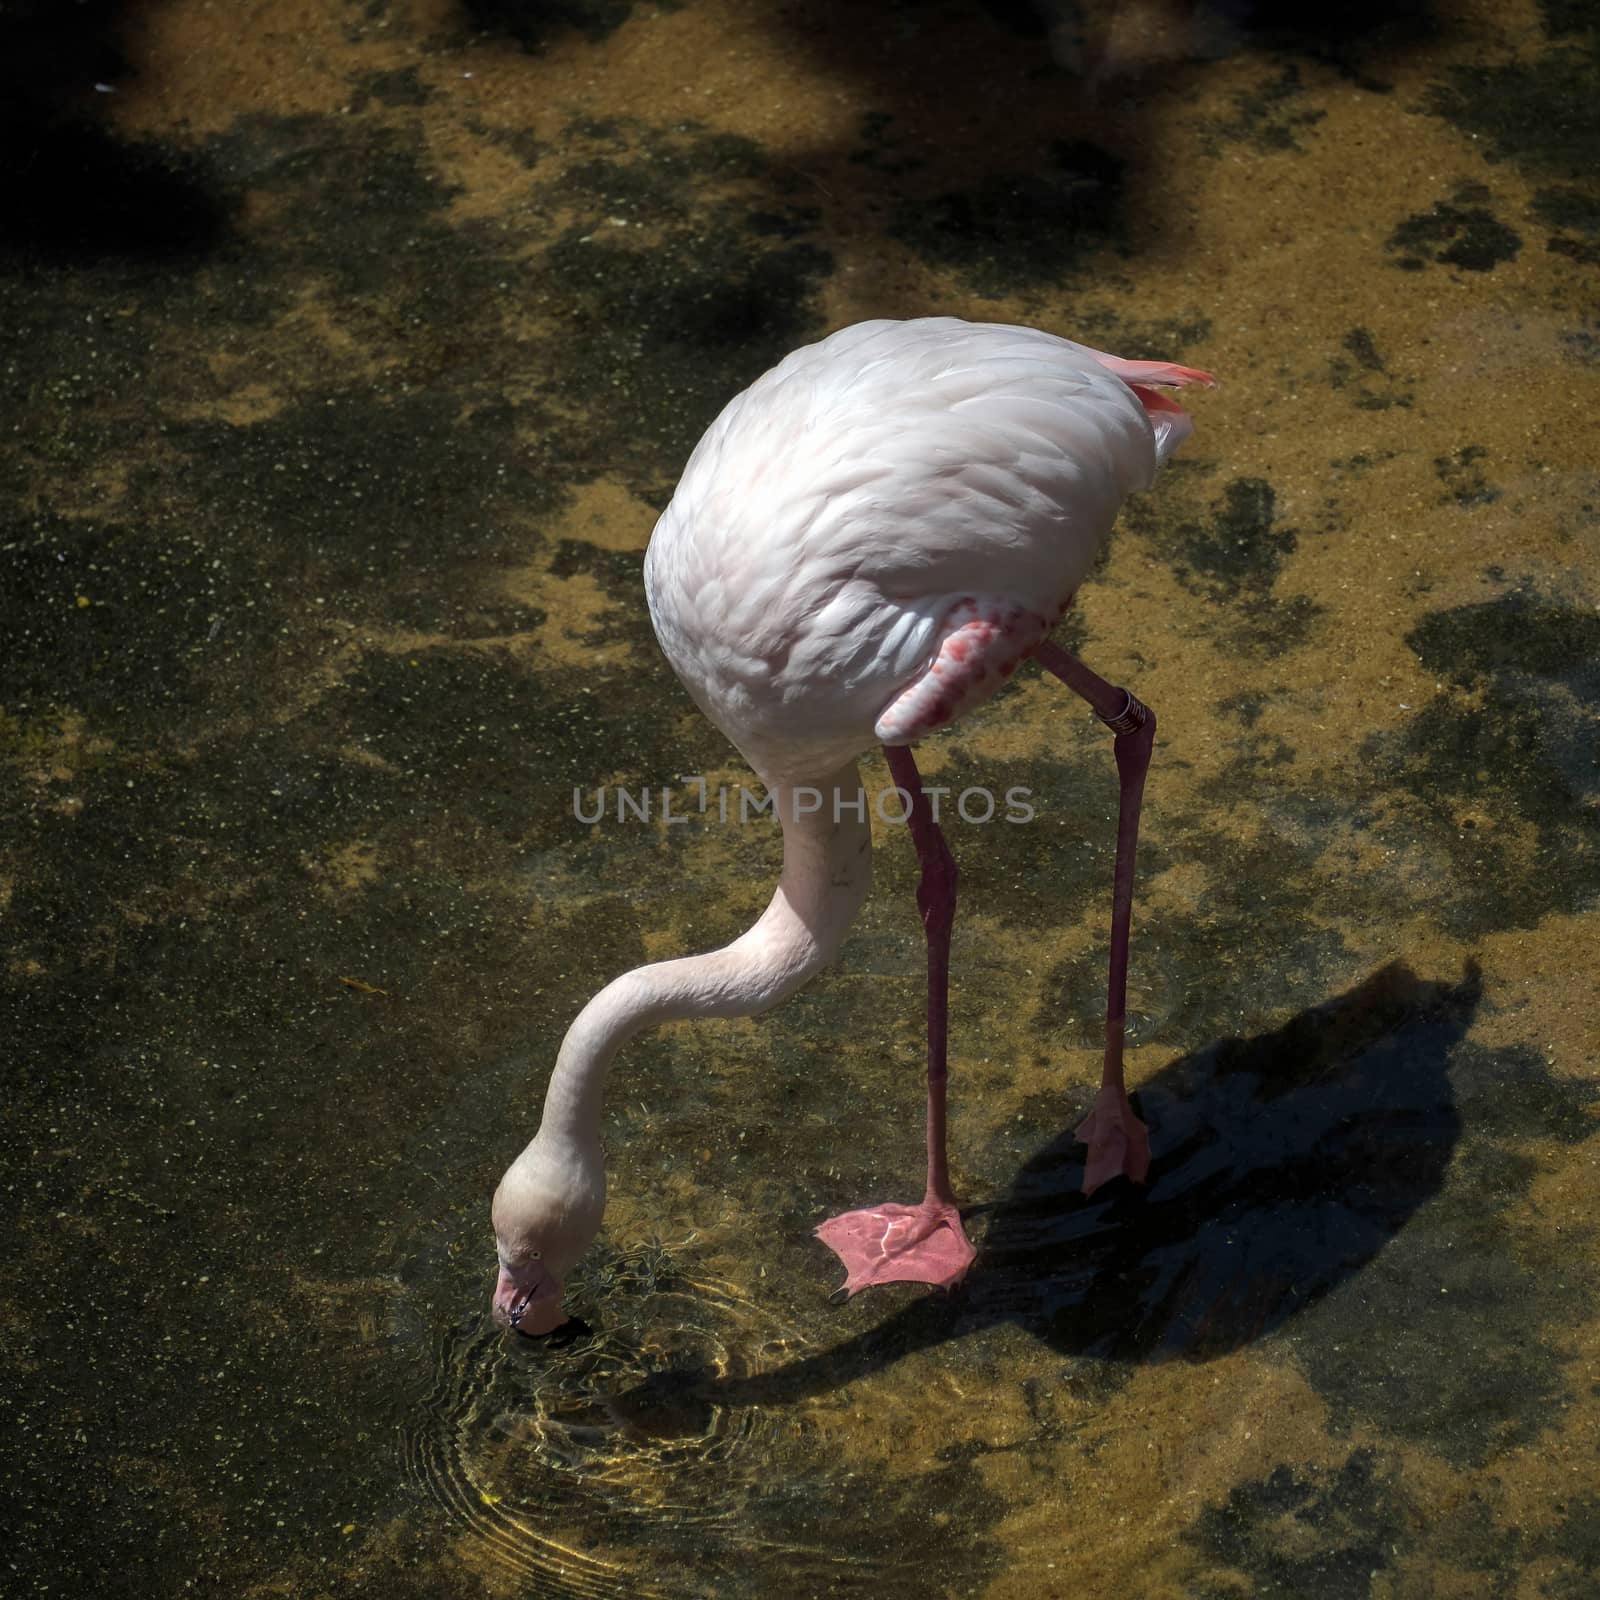 Greater Flamingo (Phoenicopterus roseus) at the Bioparc Fuengiro by phil_bird